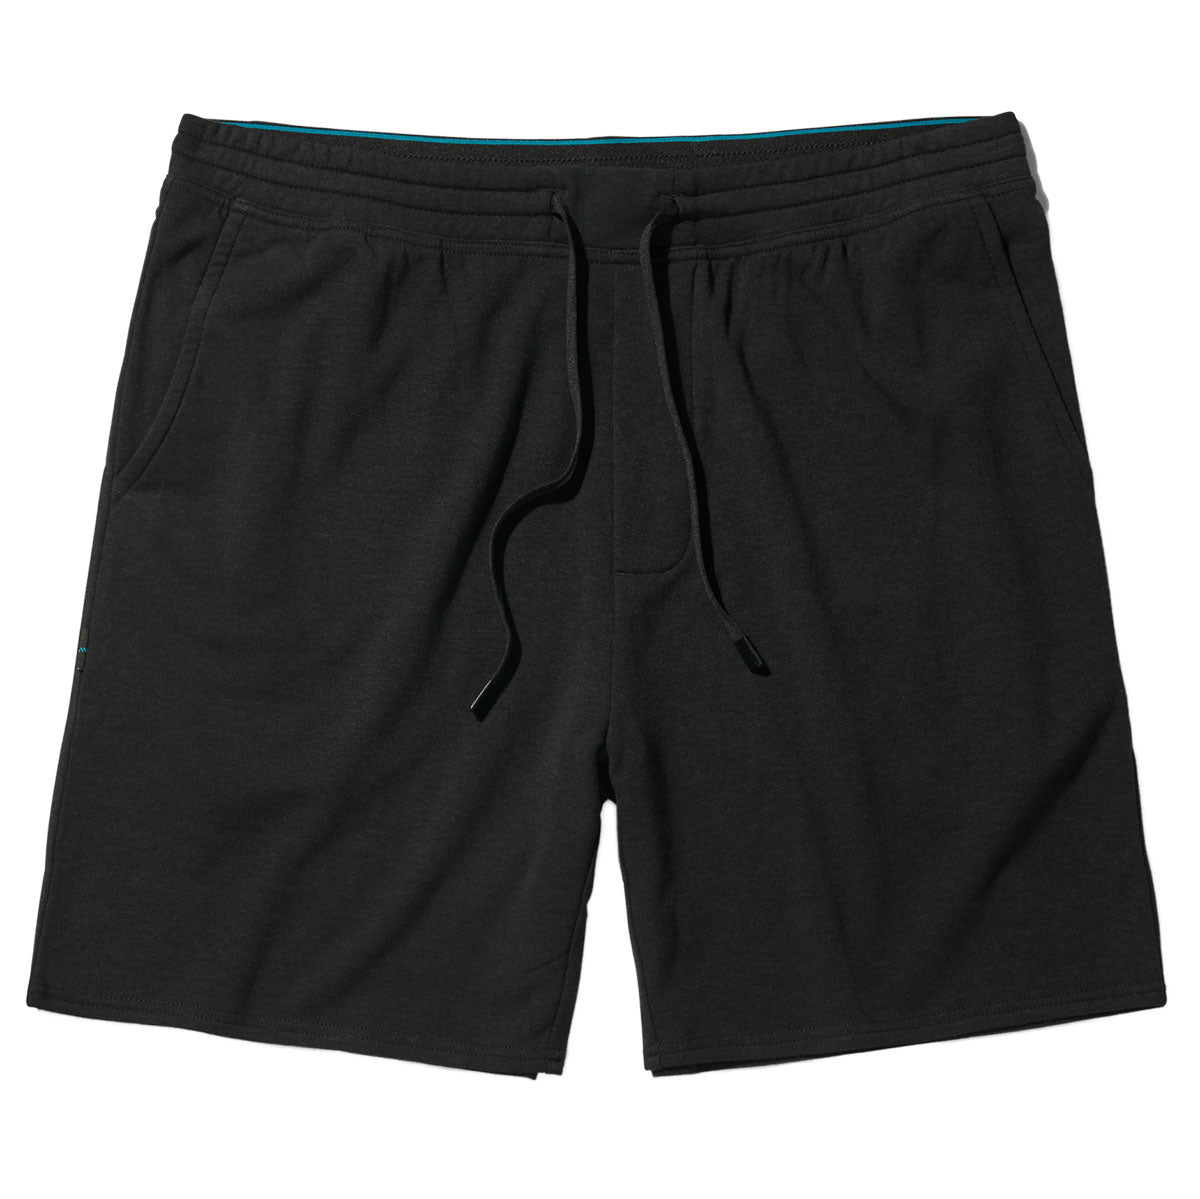 Stance Shelter Shorts - Black image 1